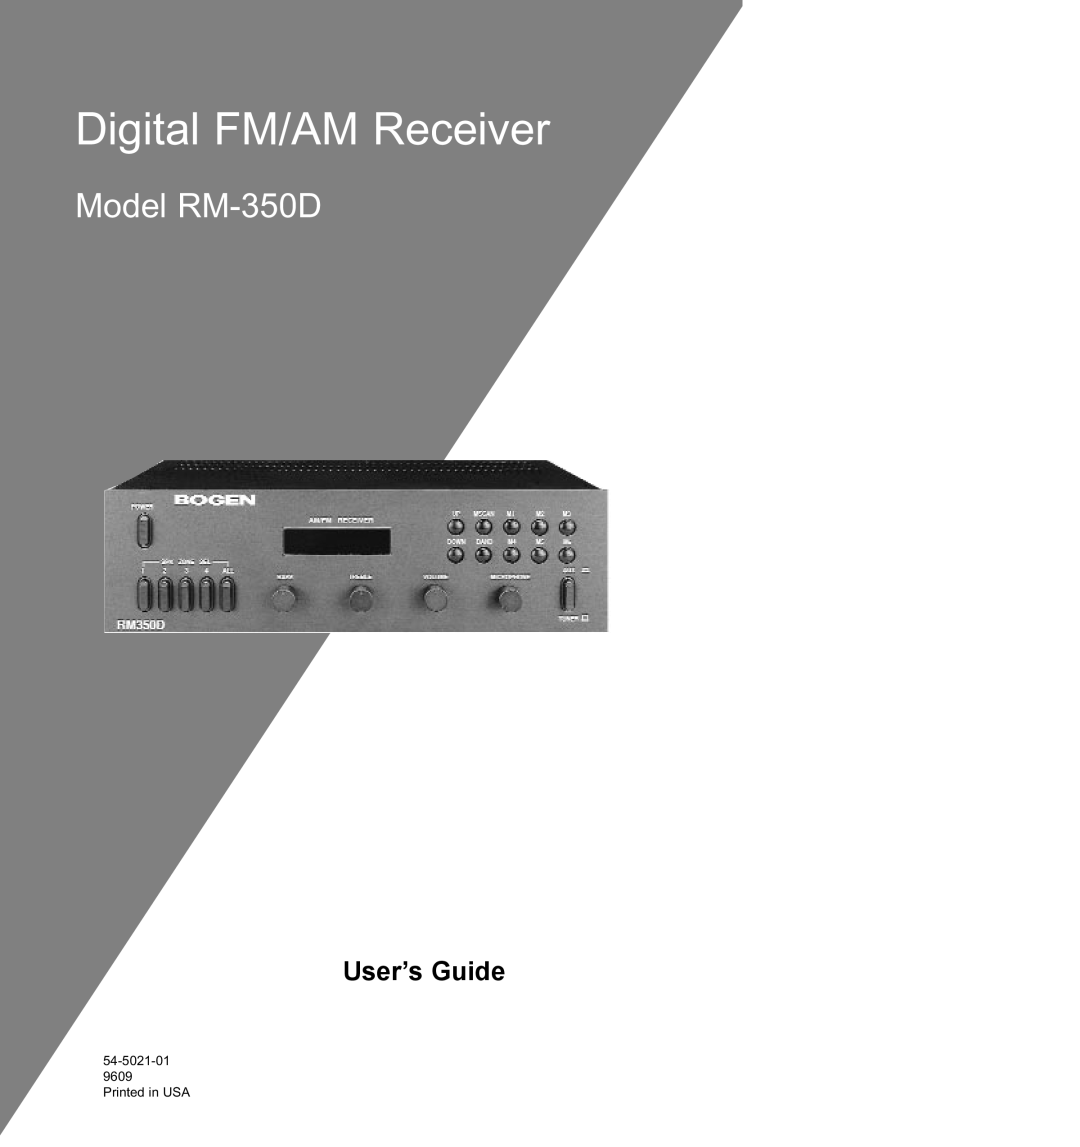 Bogen manual Digital FM/AM Receiver, Model RM-350D, User’s Guide 